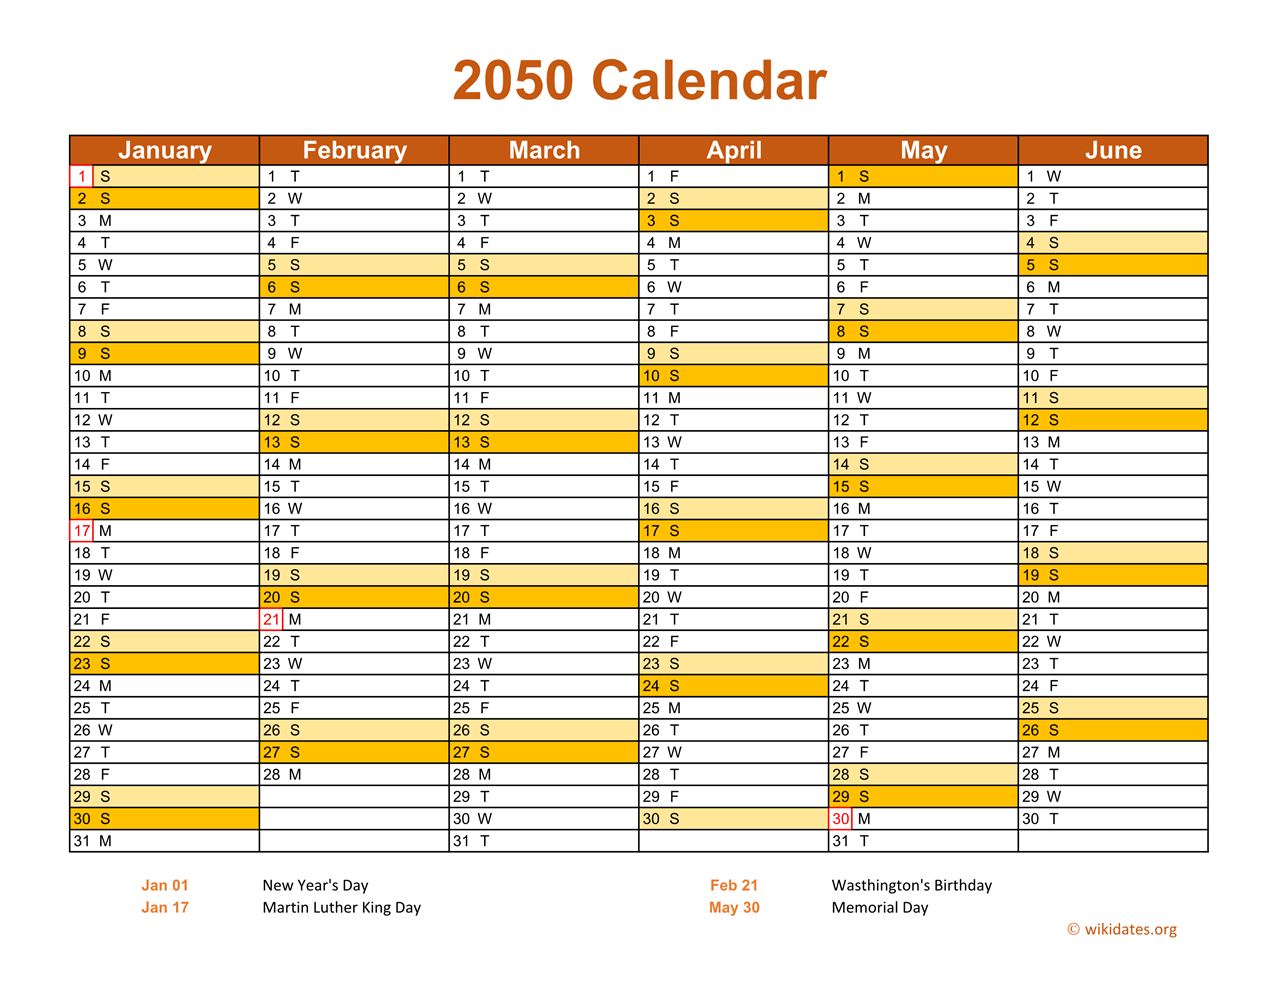 2050-calendar-on-2-pages-landscape-orientation-wikidates